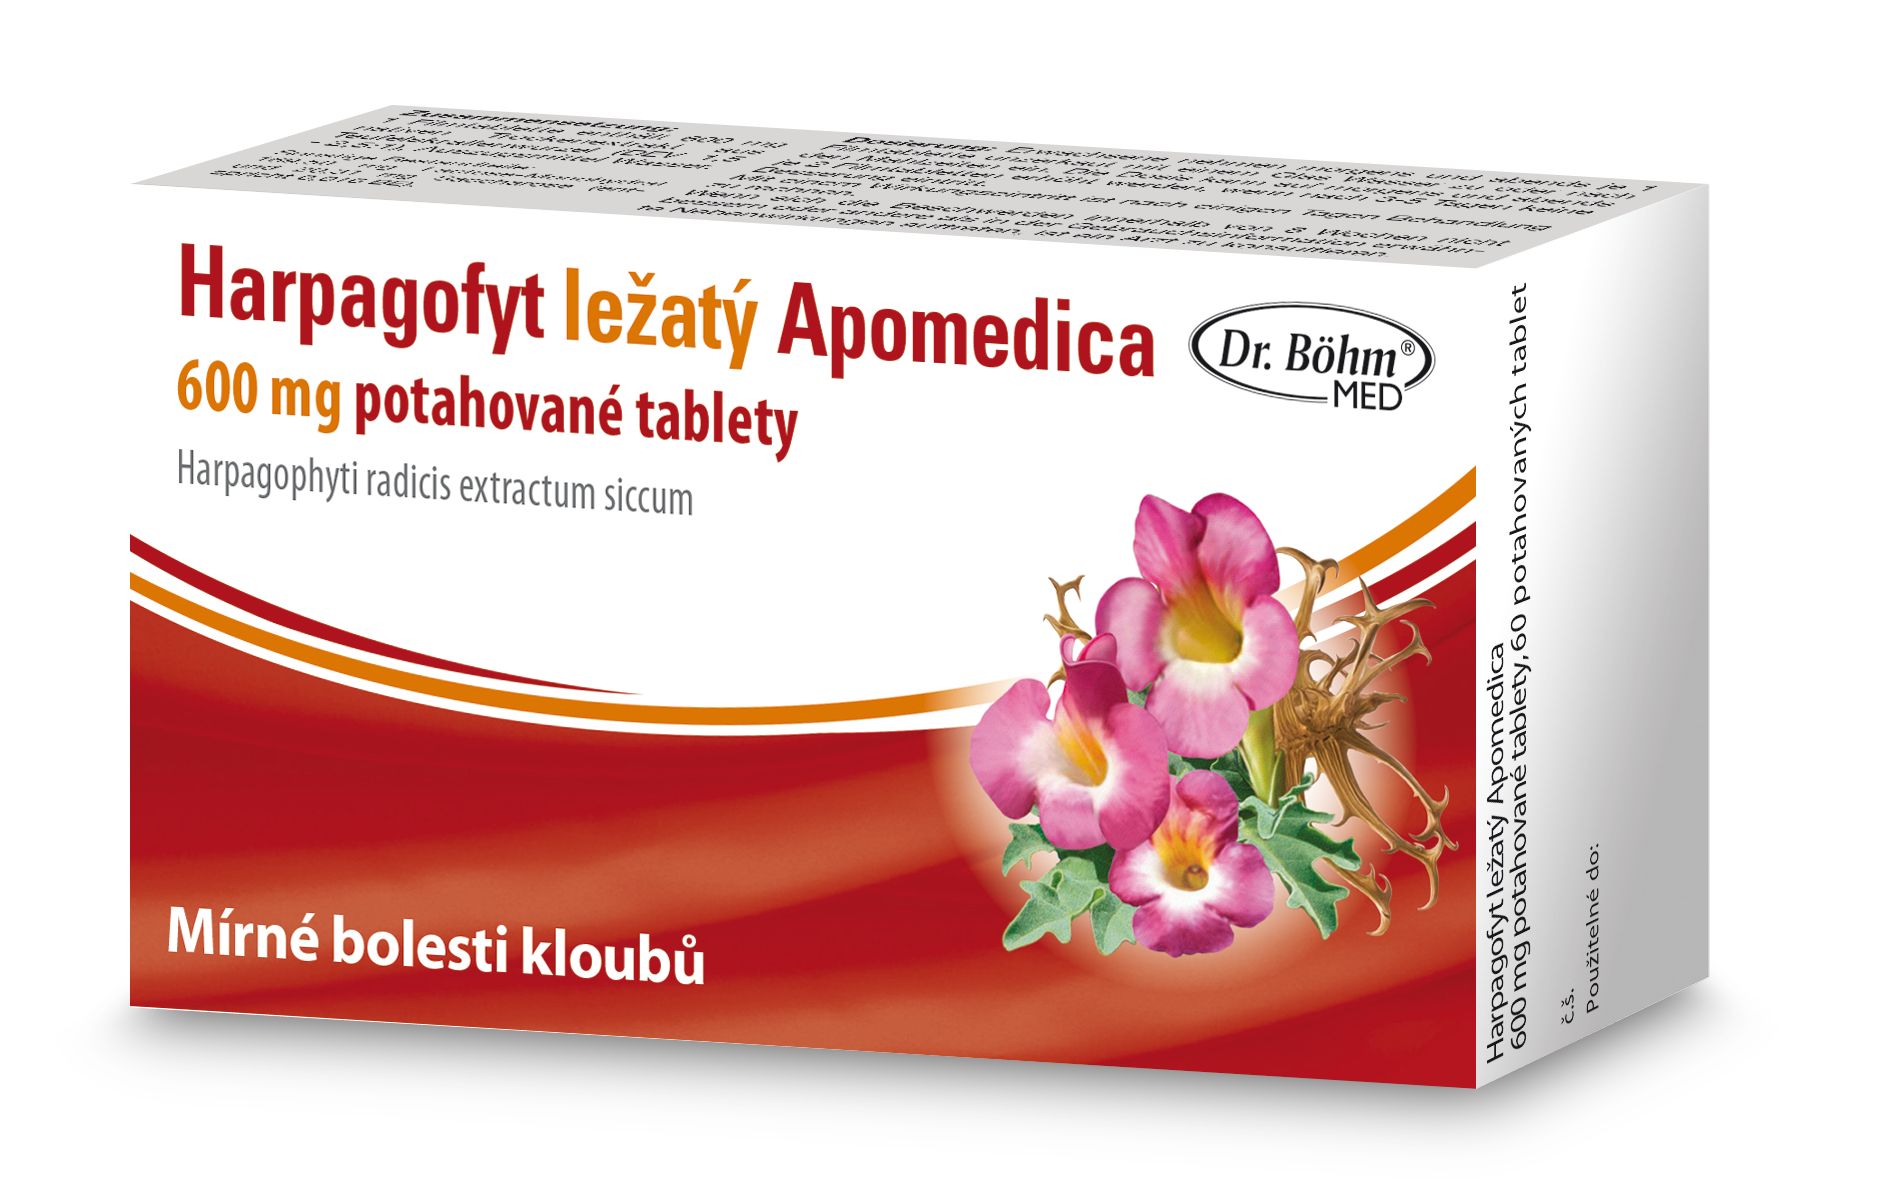 Harpagofyt ležatý Apomedica 600mg potahované tablety